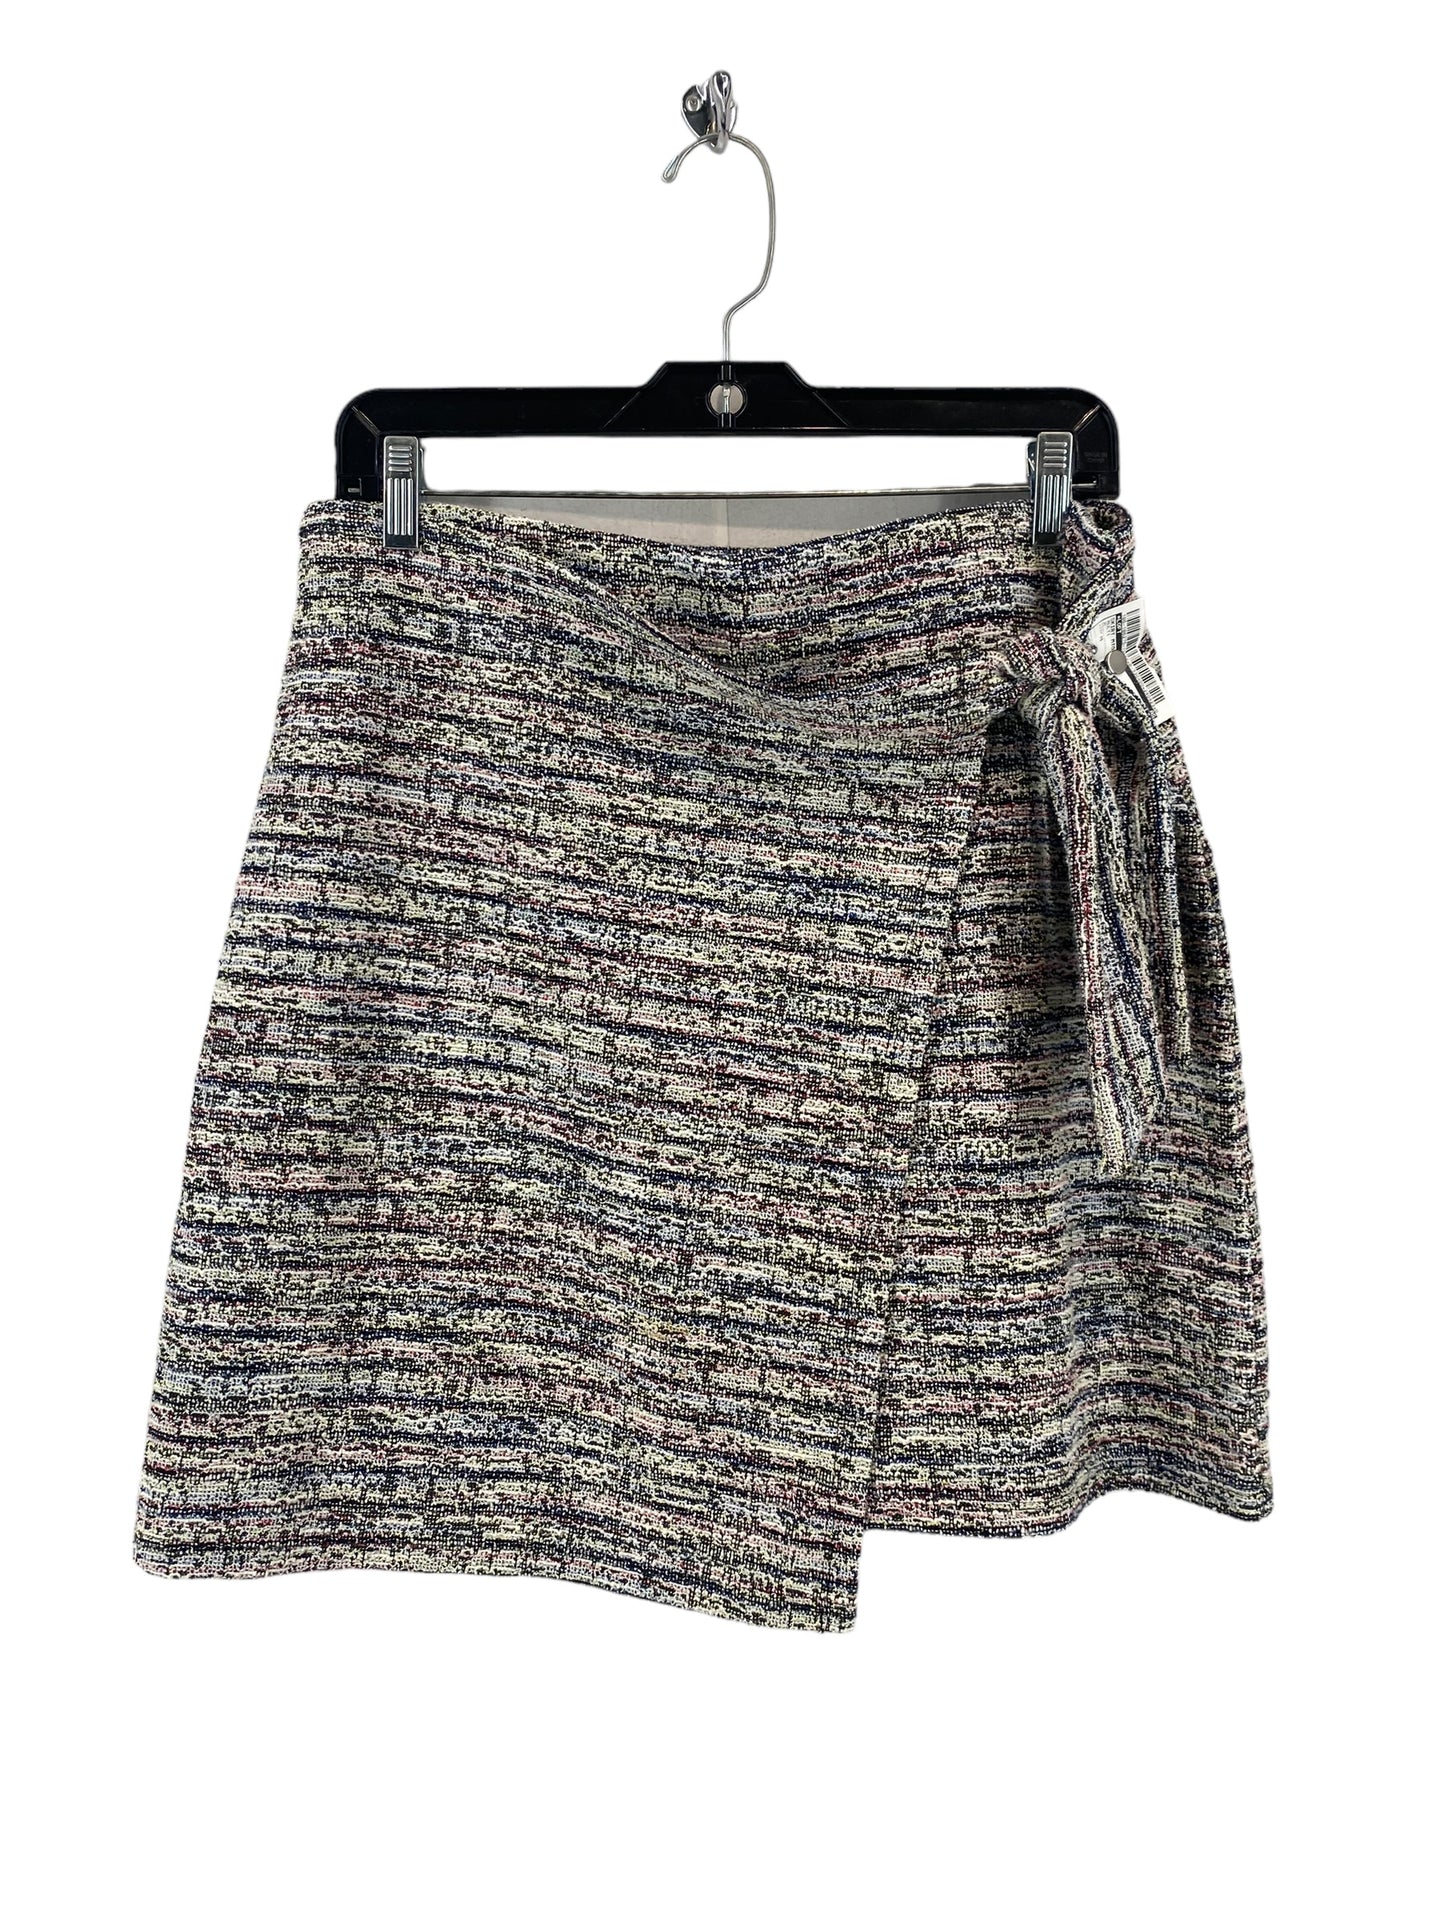 Skirt Midi By Loft  Size: M